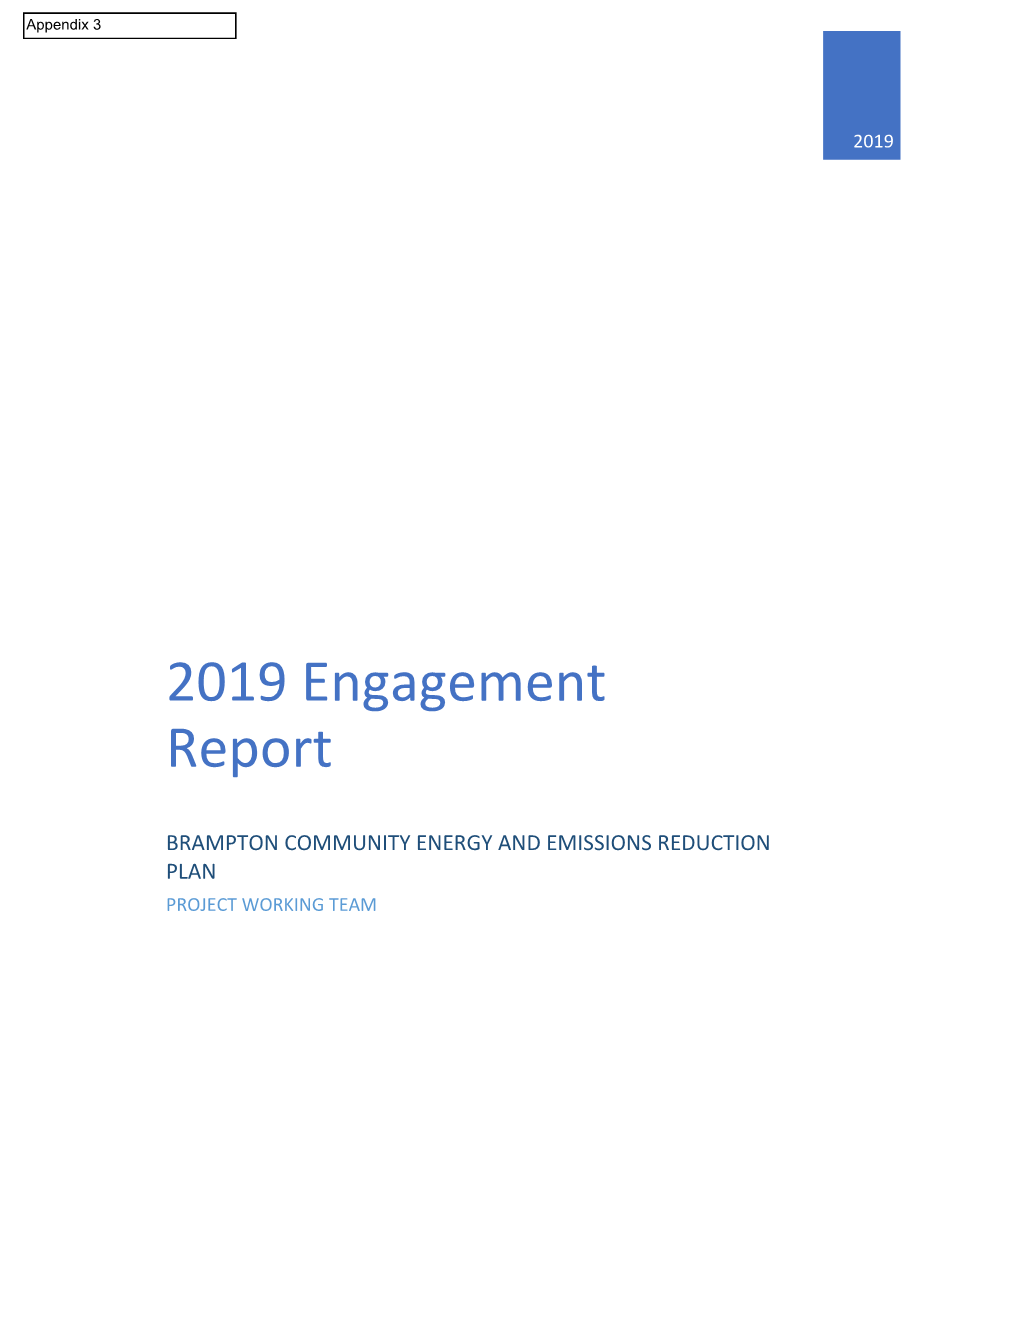 2019 Engagement Report